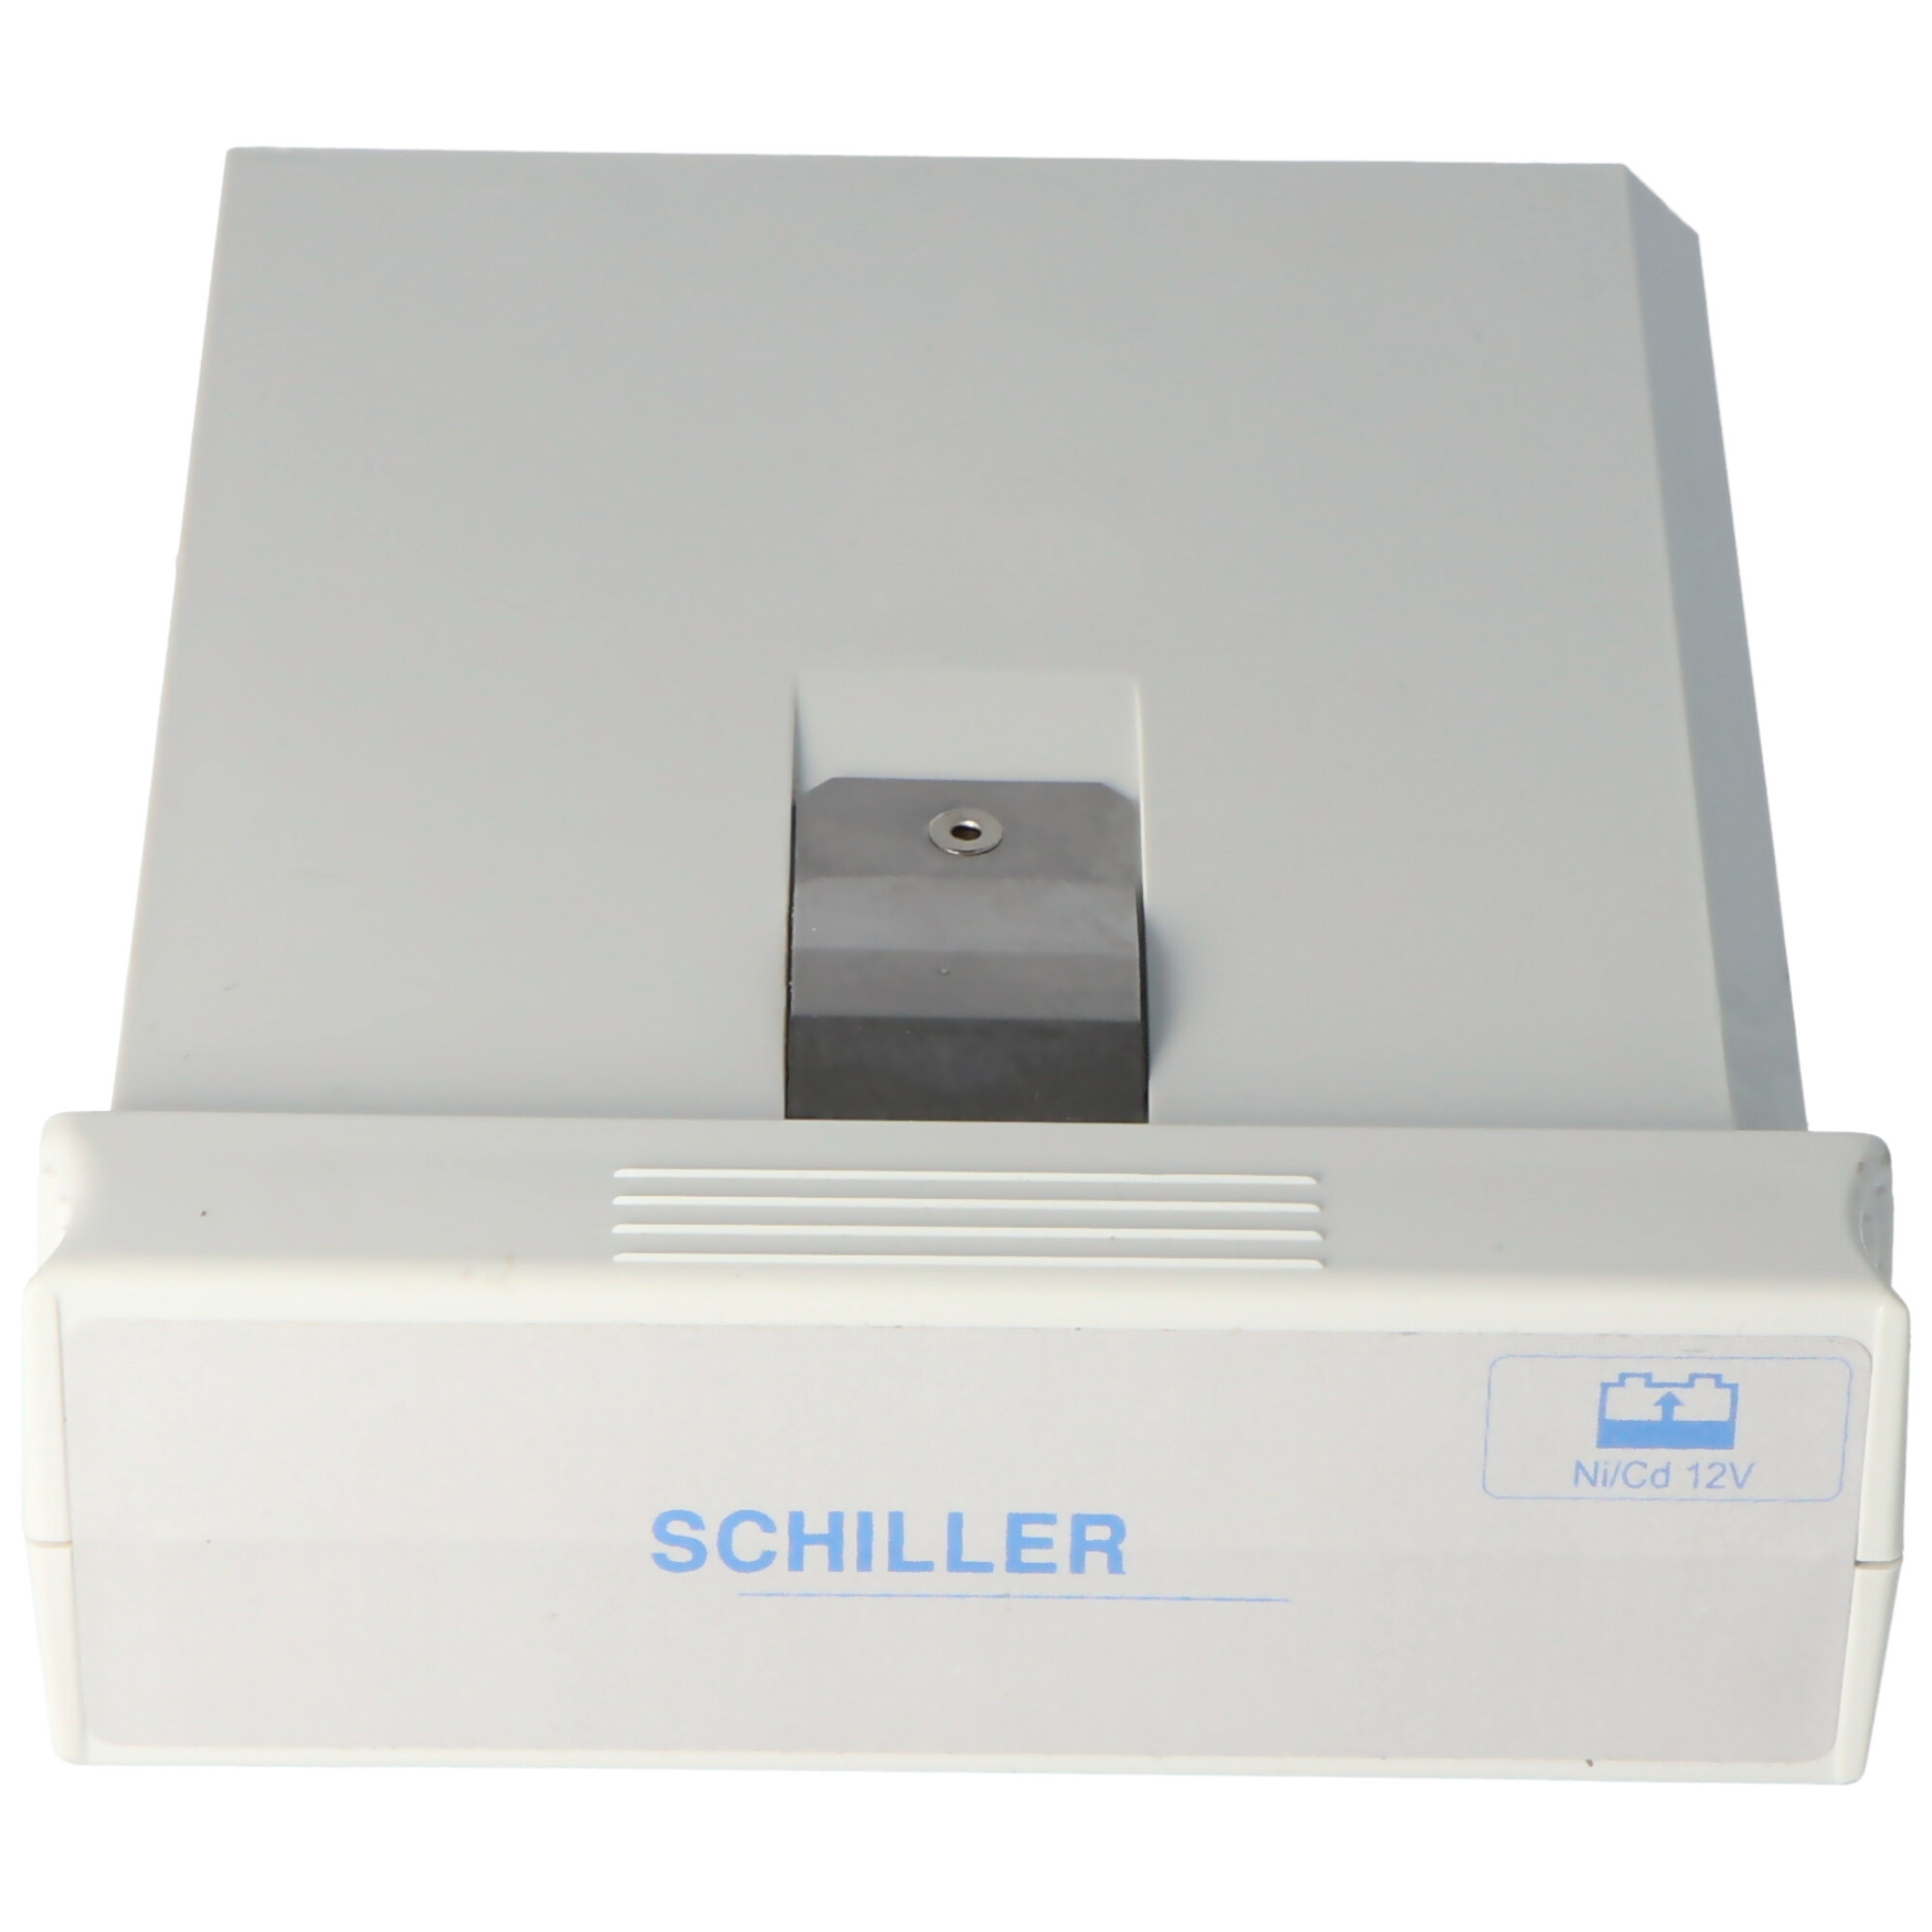 Original NC Akku Bruker, Schiller Defibrillator Defigard 1002, 2000, 2002, 6002 Typ TM910